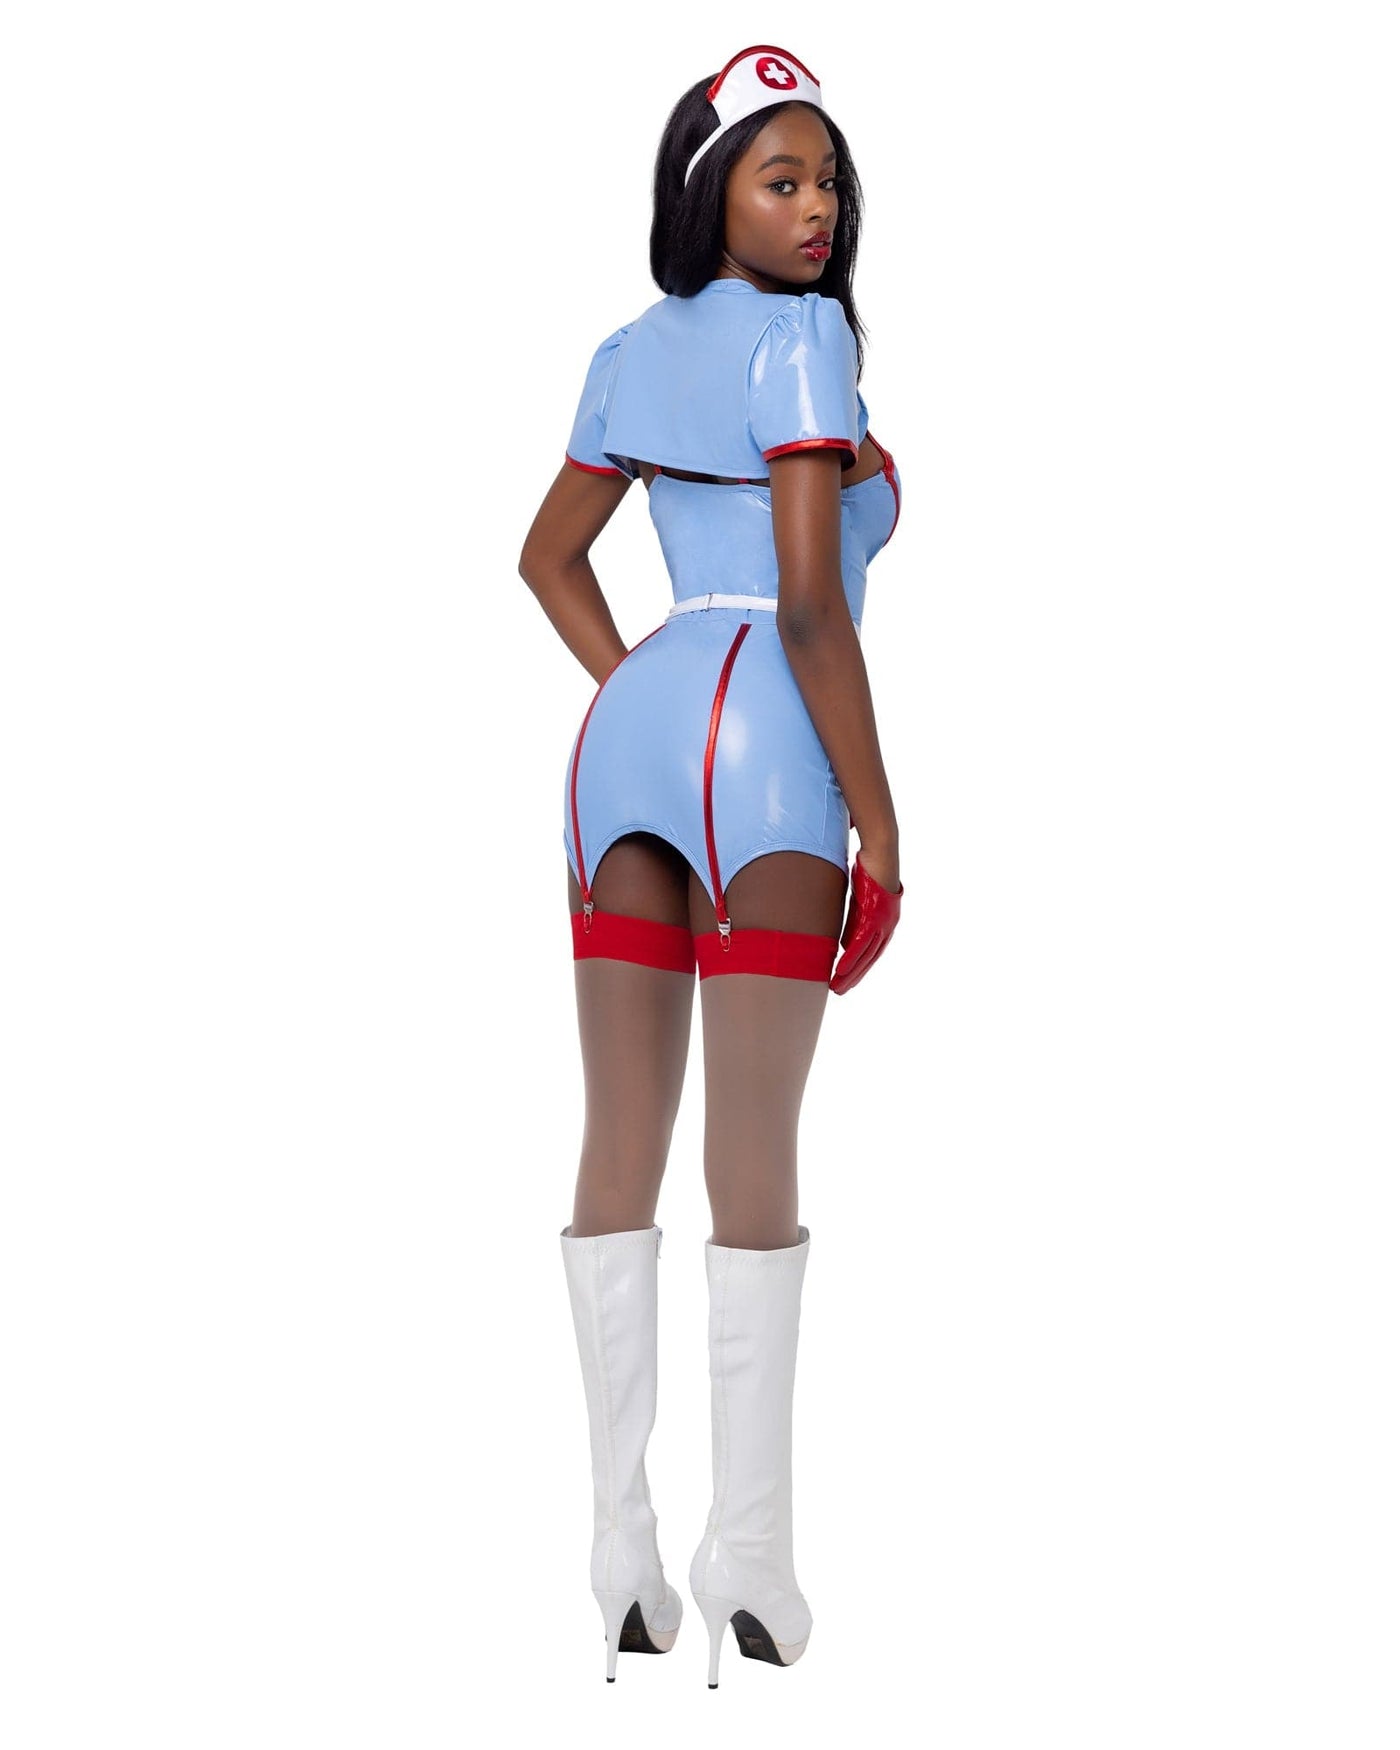 4pc. Retro Nurse Women's Costume - For Love of Lingerie